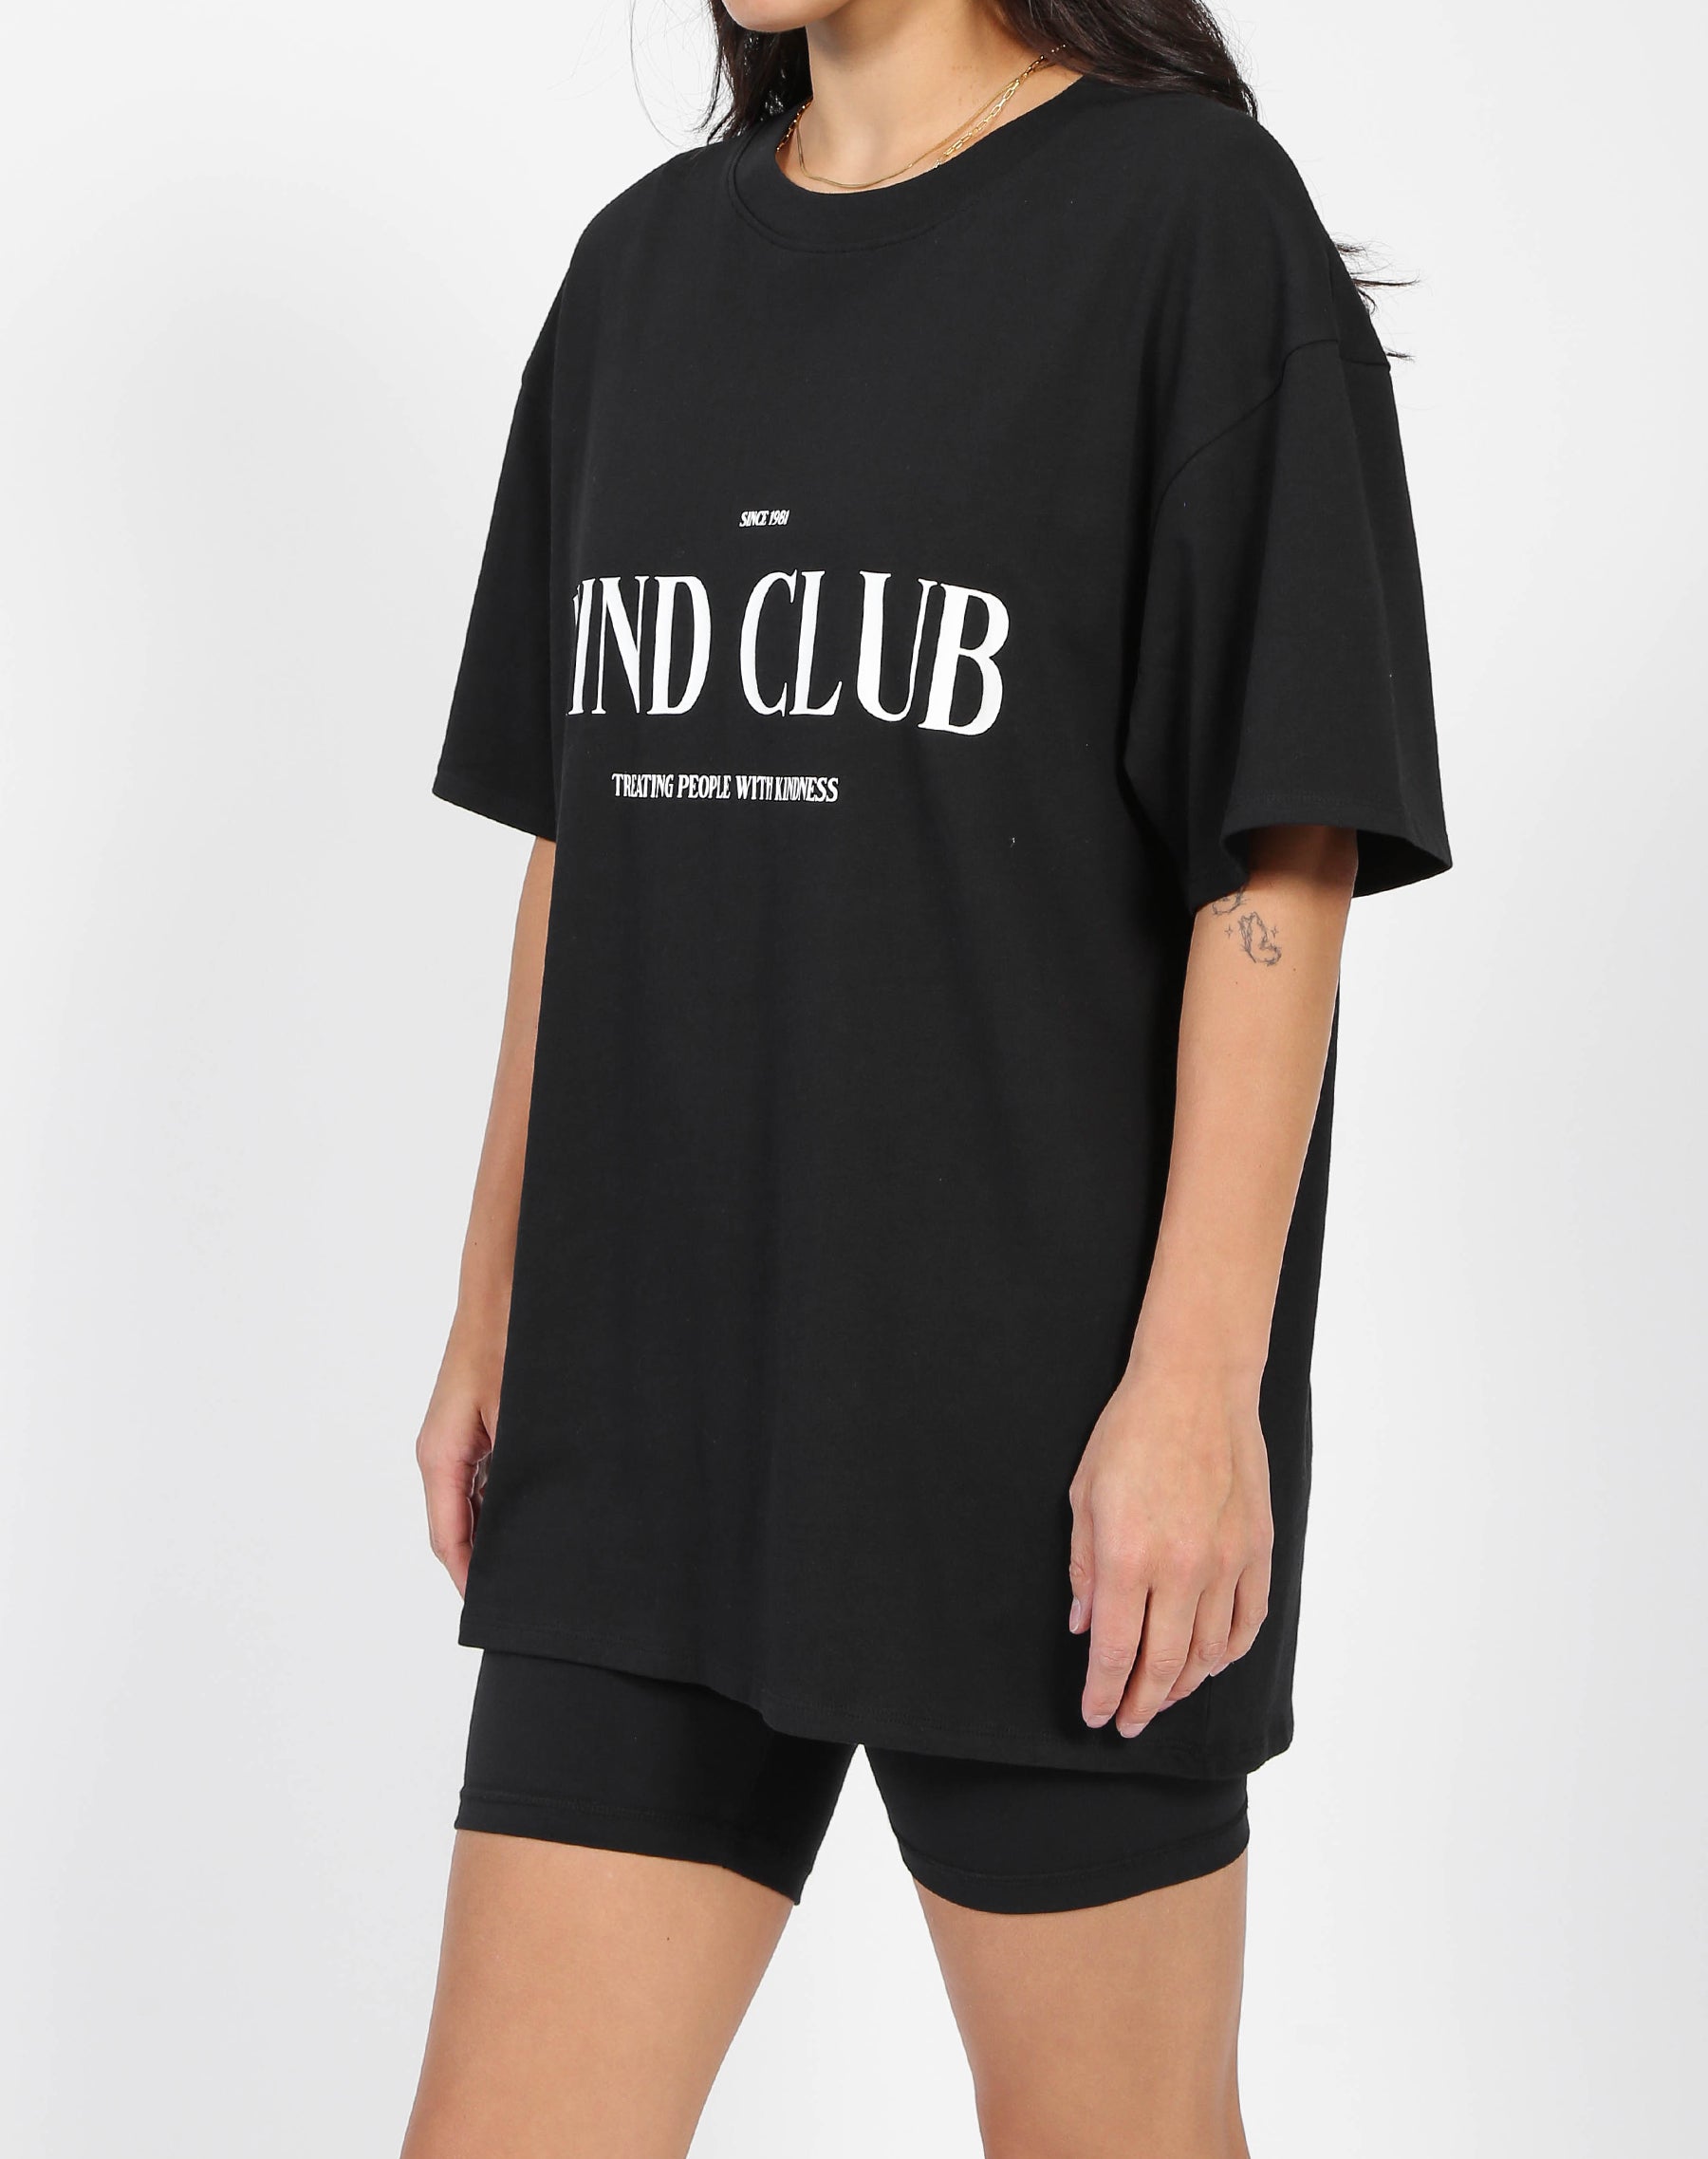 The "KIND CLUB" Oversized Boxy Tee | Black